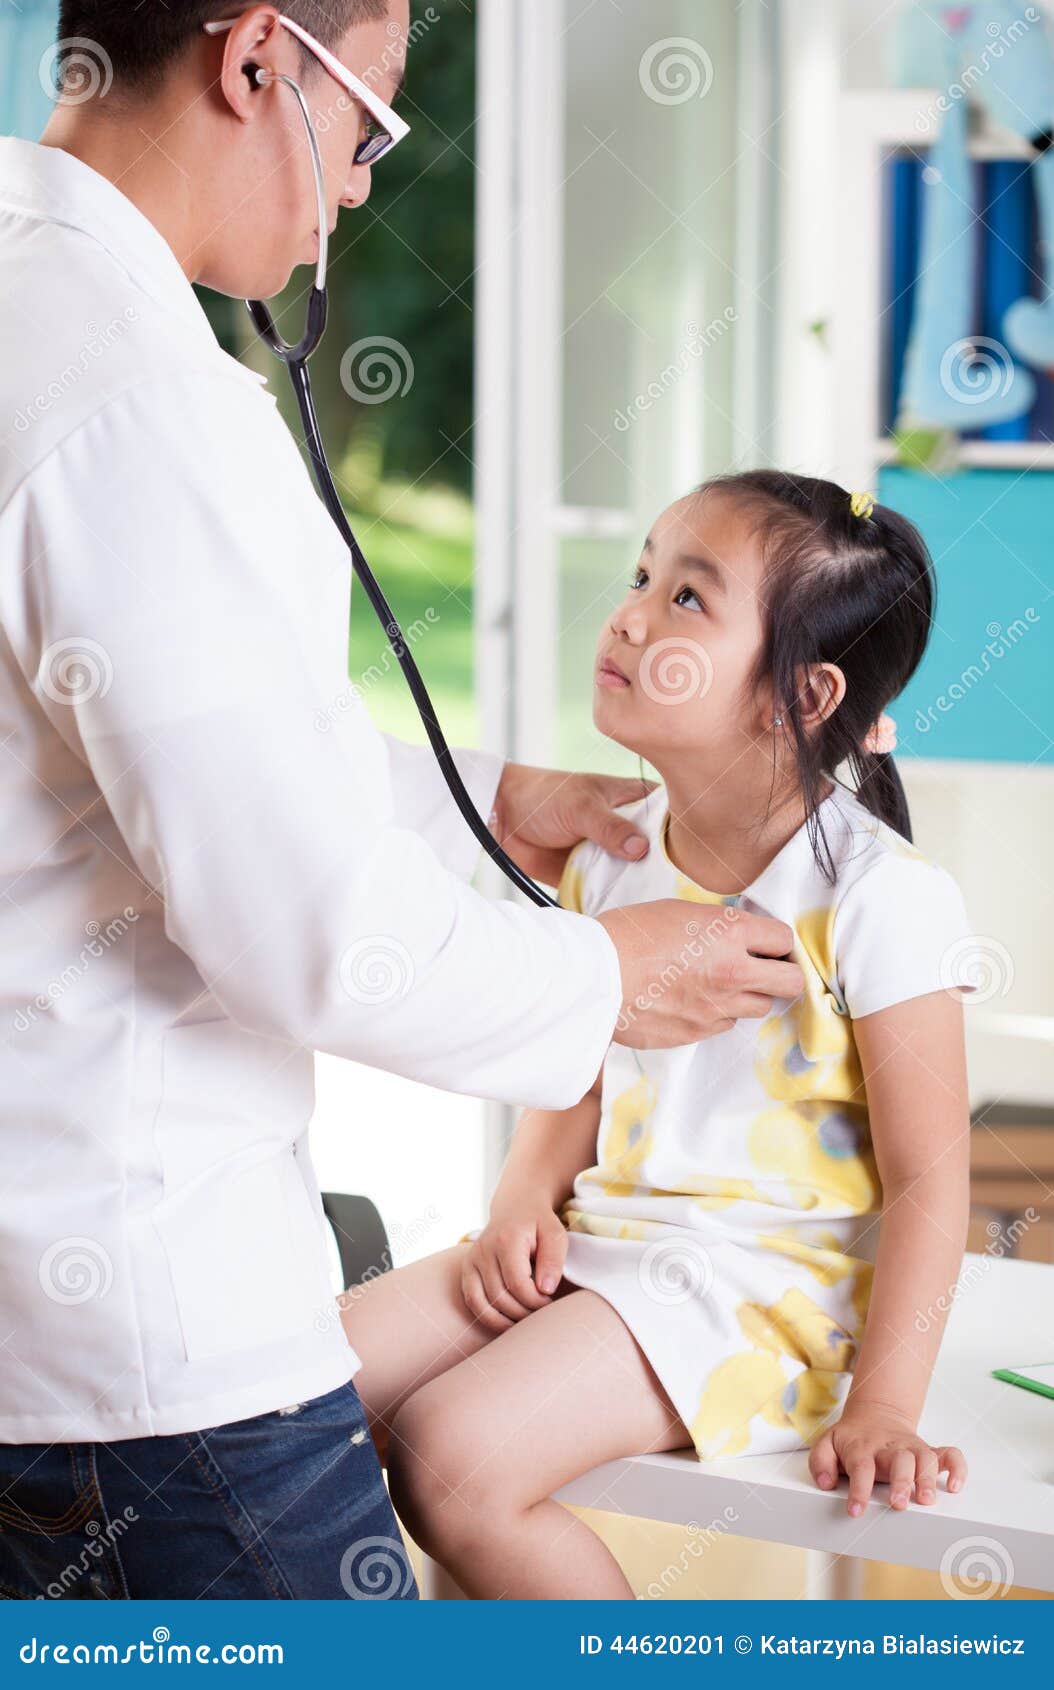 hospital medical doctor by girl Asian exam